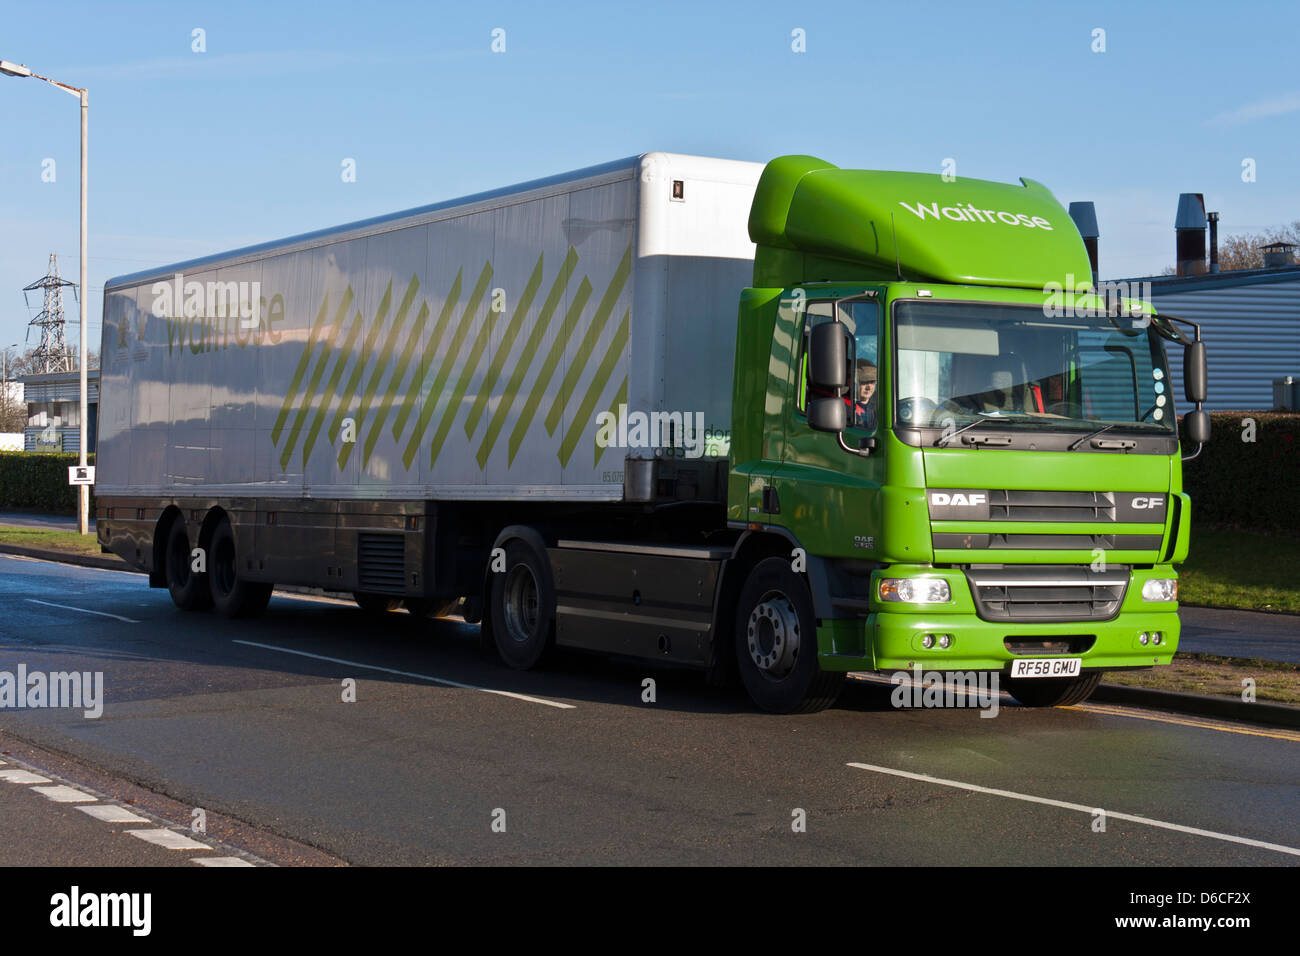 Waitrose supermarket HGV food truck on the road. Bracknell, Berkshire, England, GB, UK Stock Photo